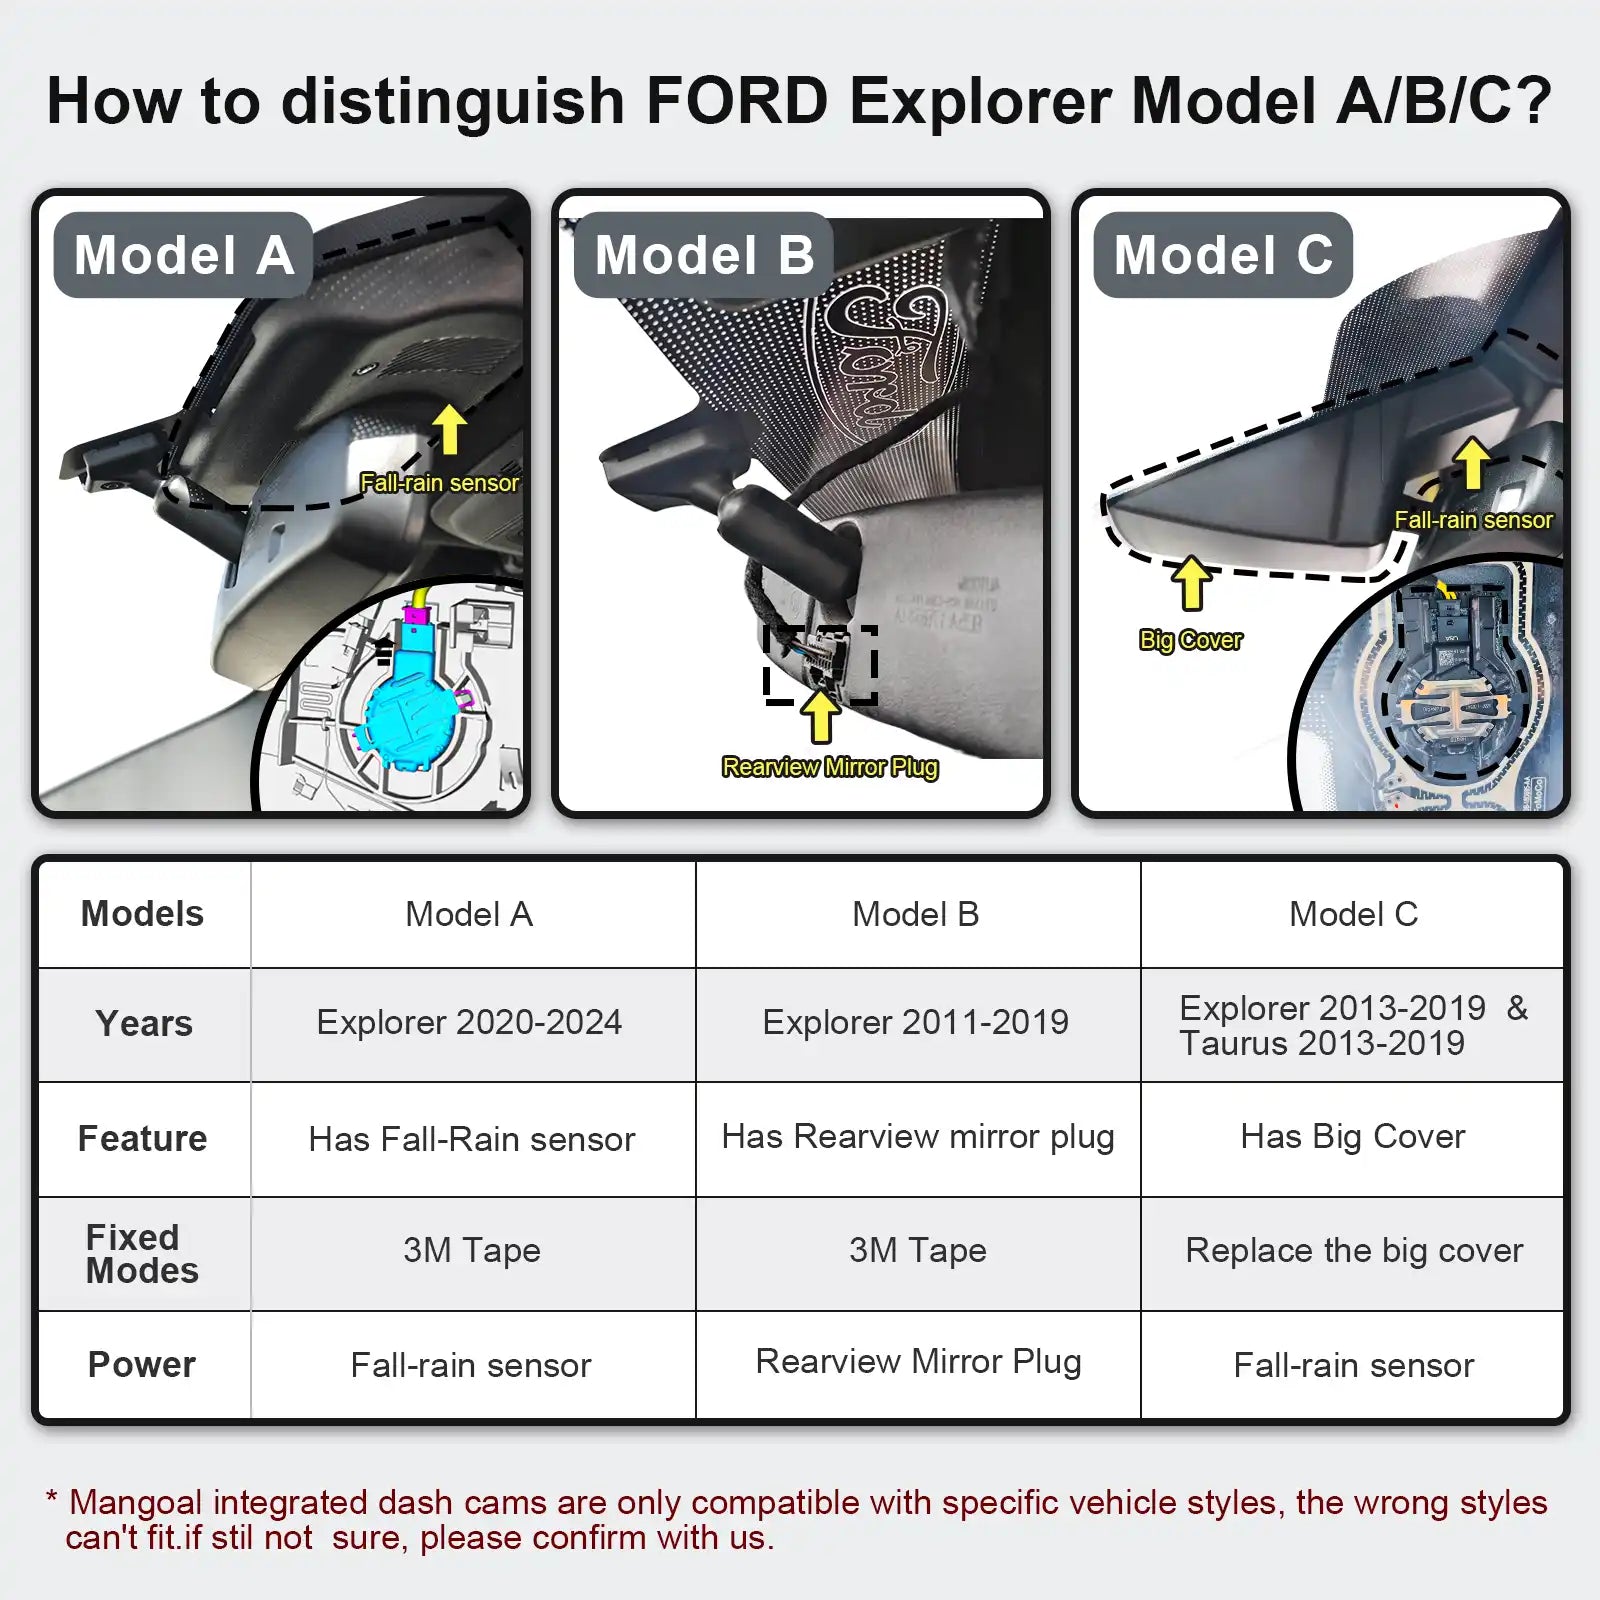 Ford Explorer & Taurus dash cam models A/B/C